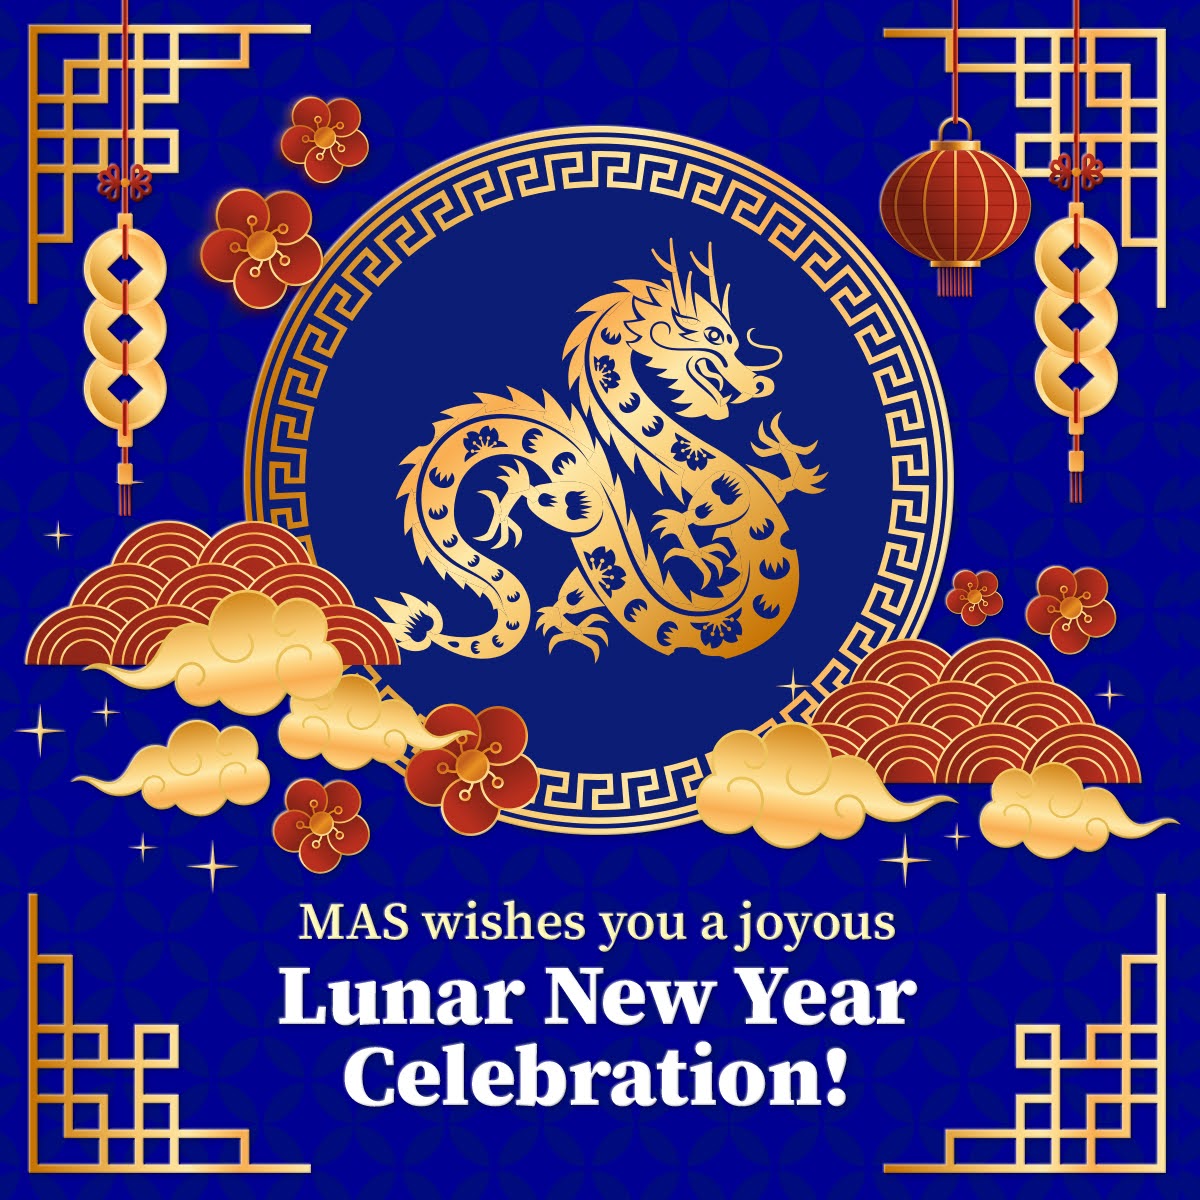 Happy Lunar New Year! Wishing you prosperity, good health, and joy. 🧧